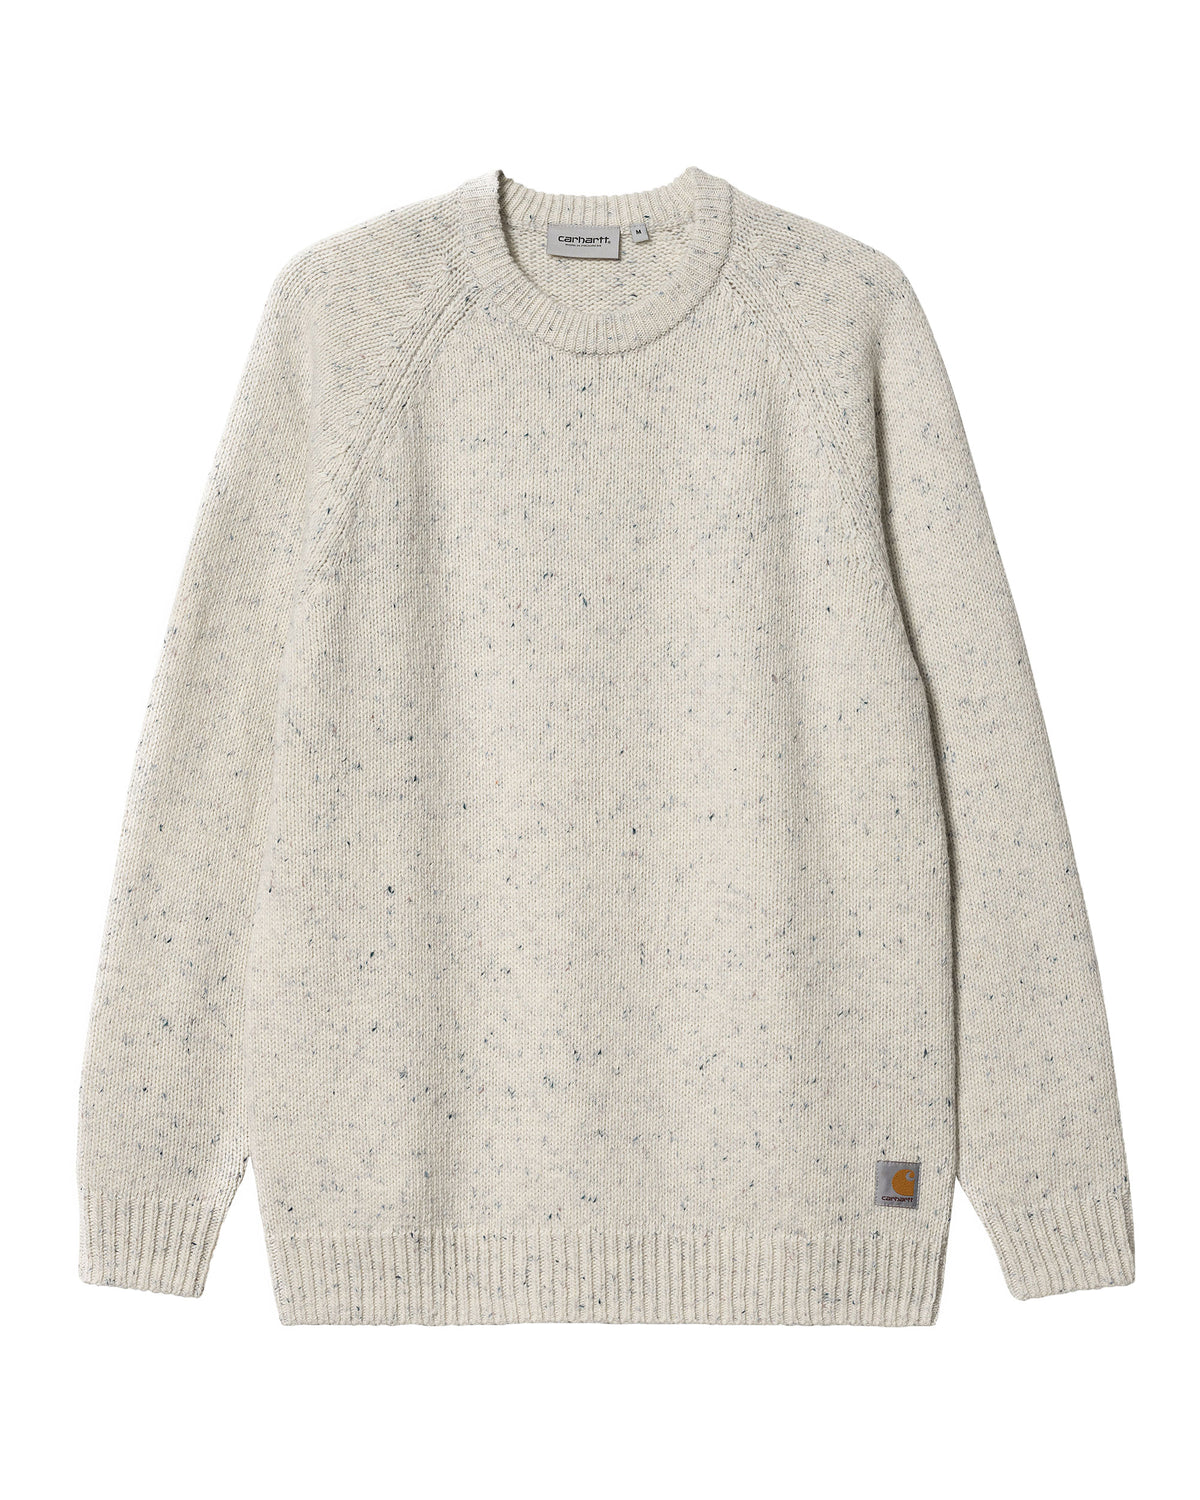 Carhartt Wip Anglistic Sweater Speckled Salt